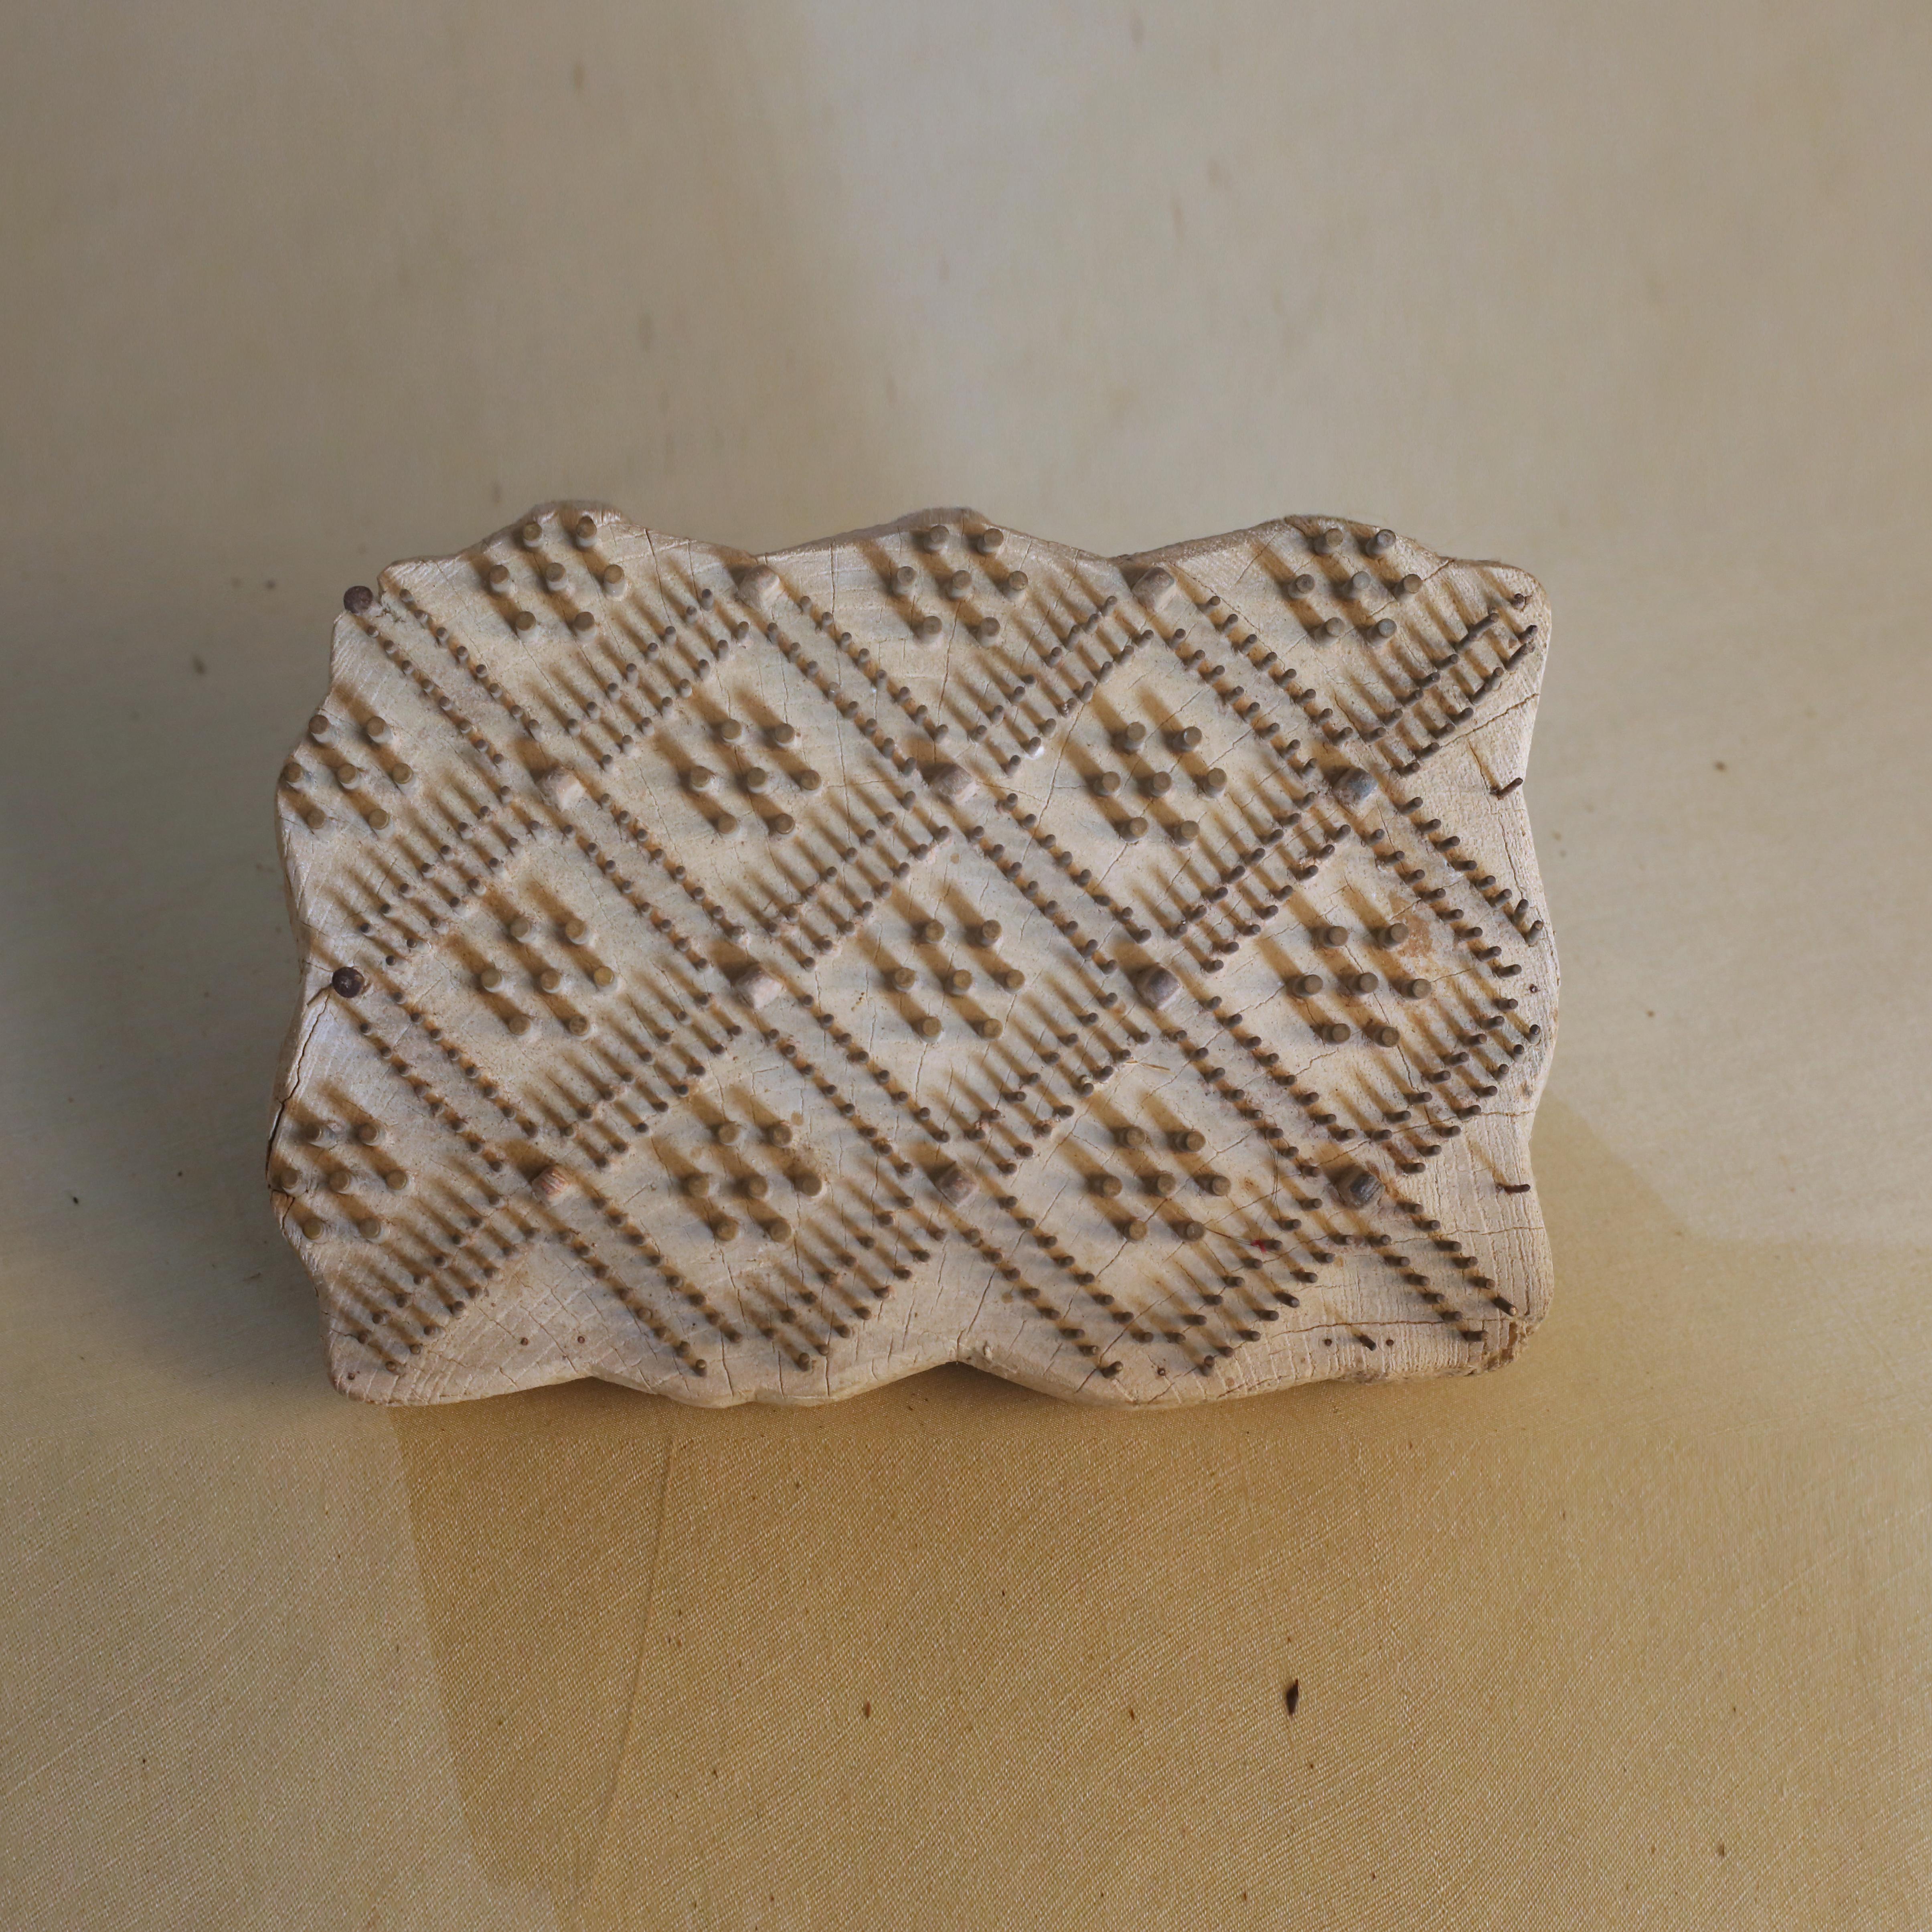 AHM24 - Block Printed Fabric, 100% Cotton, Ajrak Design/ Black Diamond Dots. Block